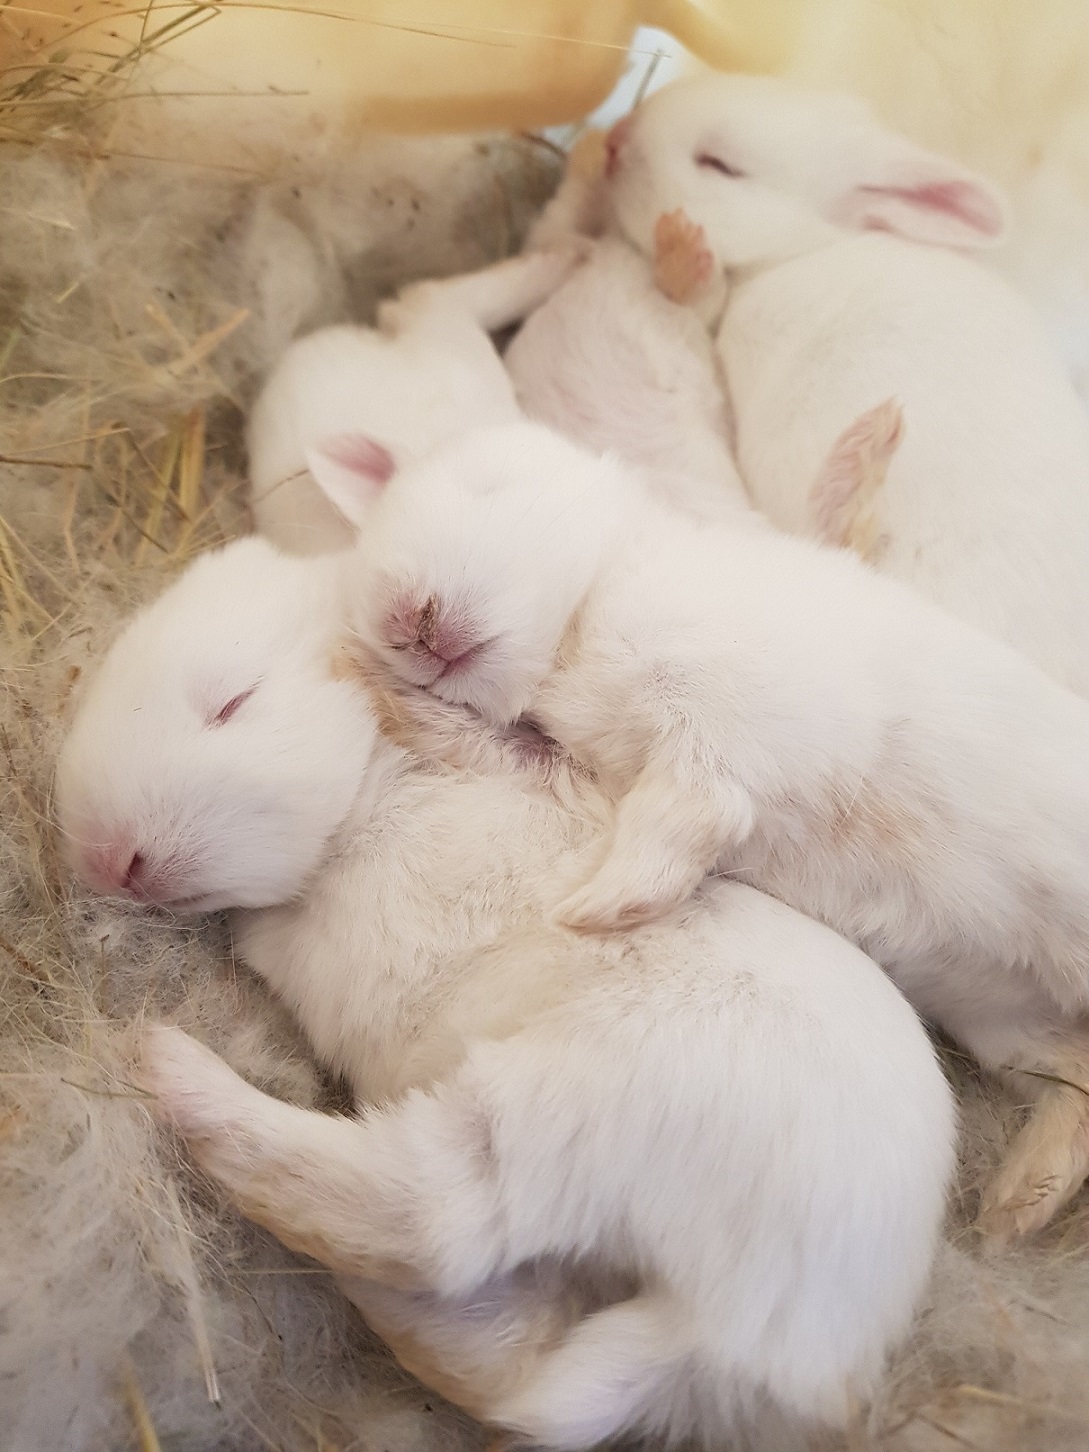 New Zealand White Rabbits - Pure breeding stock.